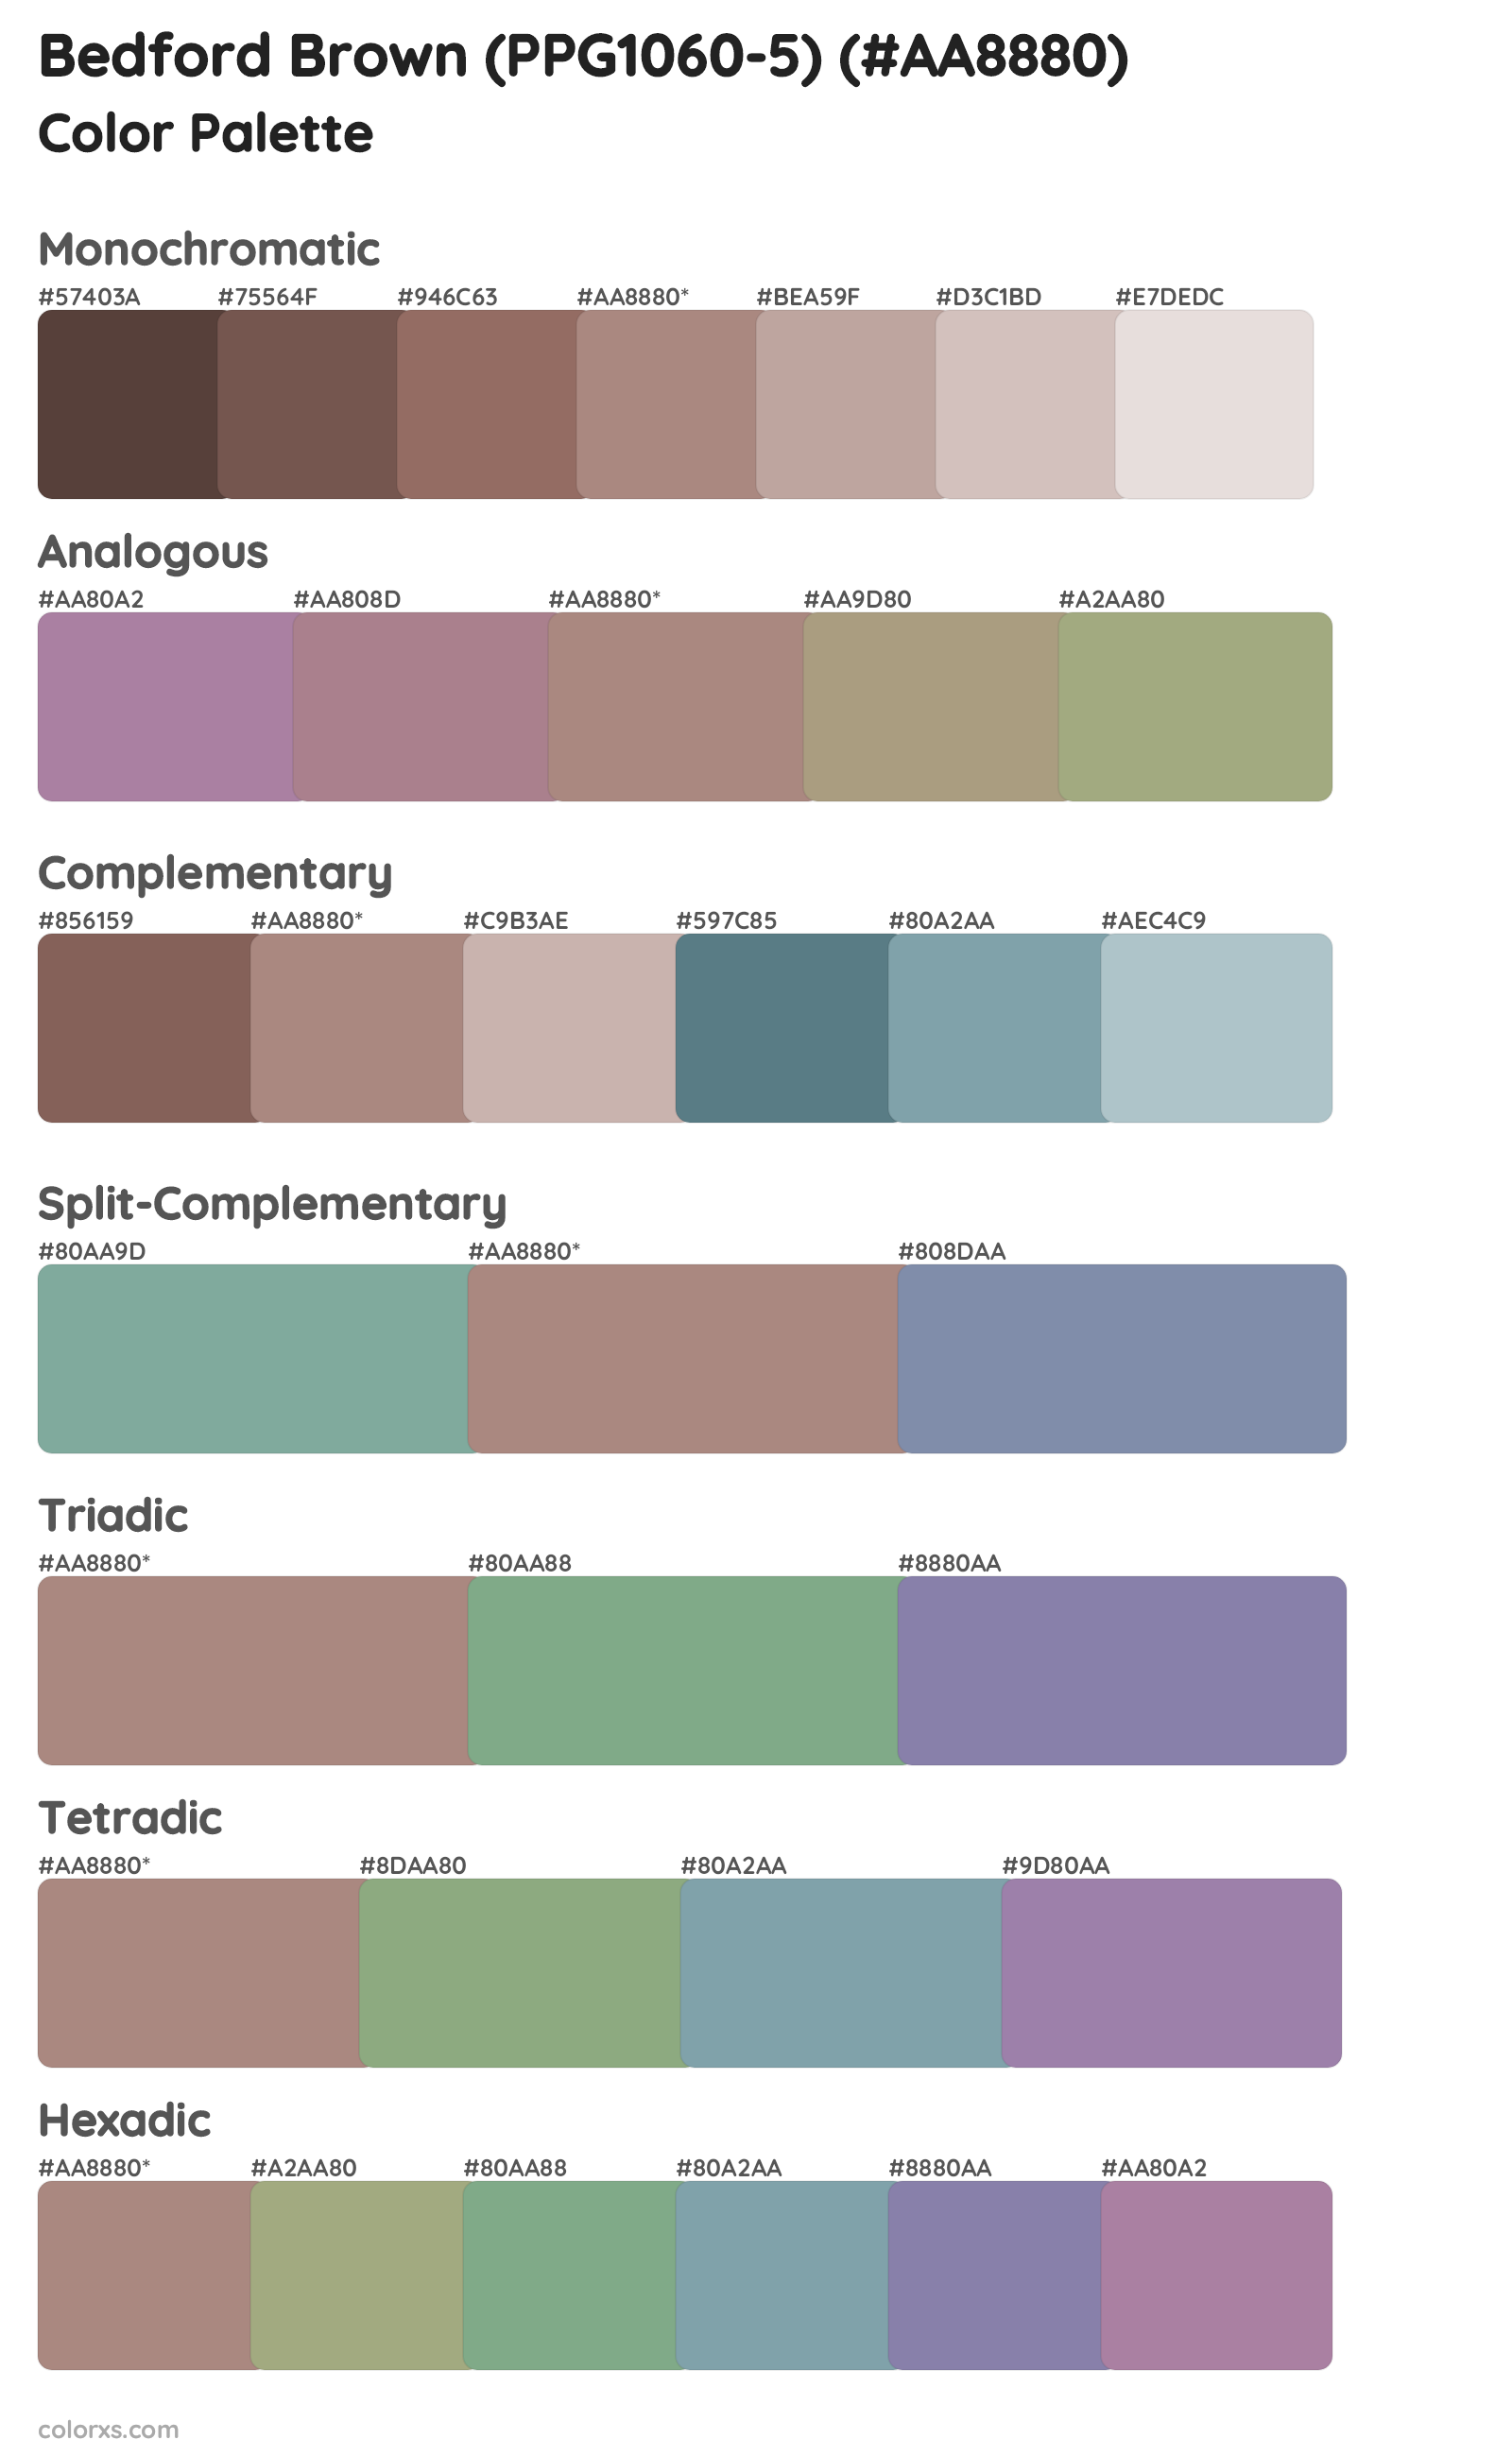 Bedford Brown (PPG1060-5) Color Scheme Palettes